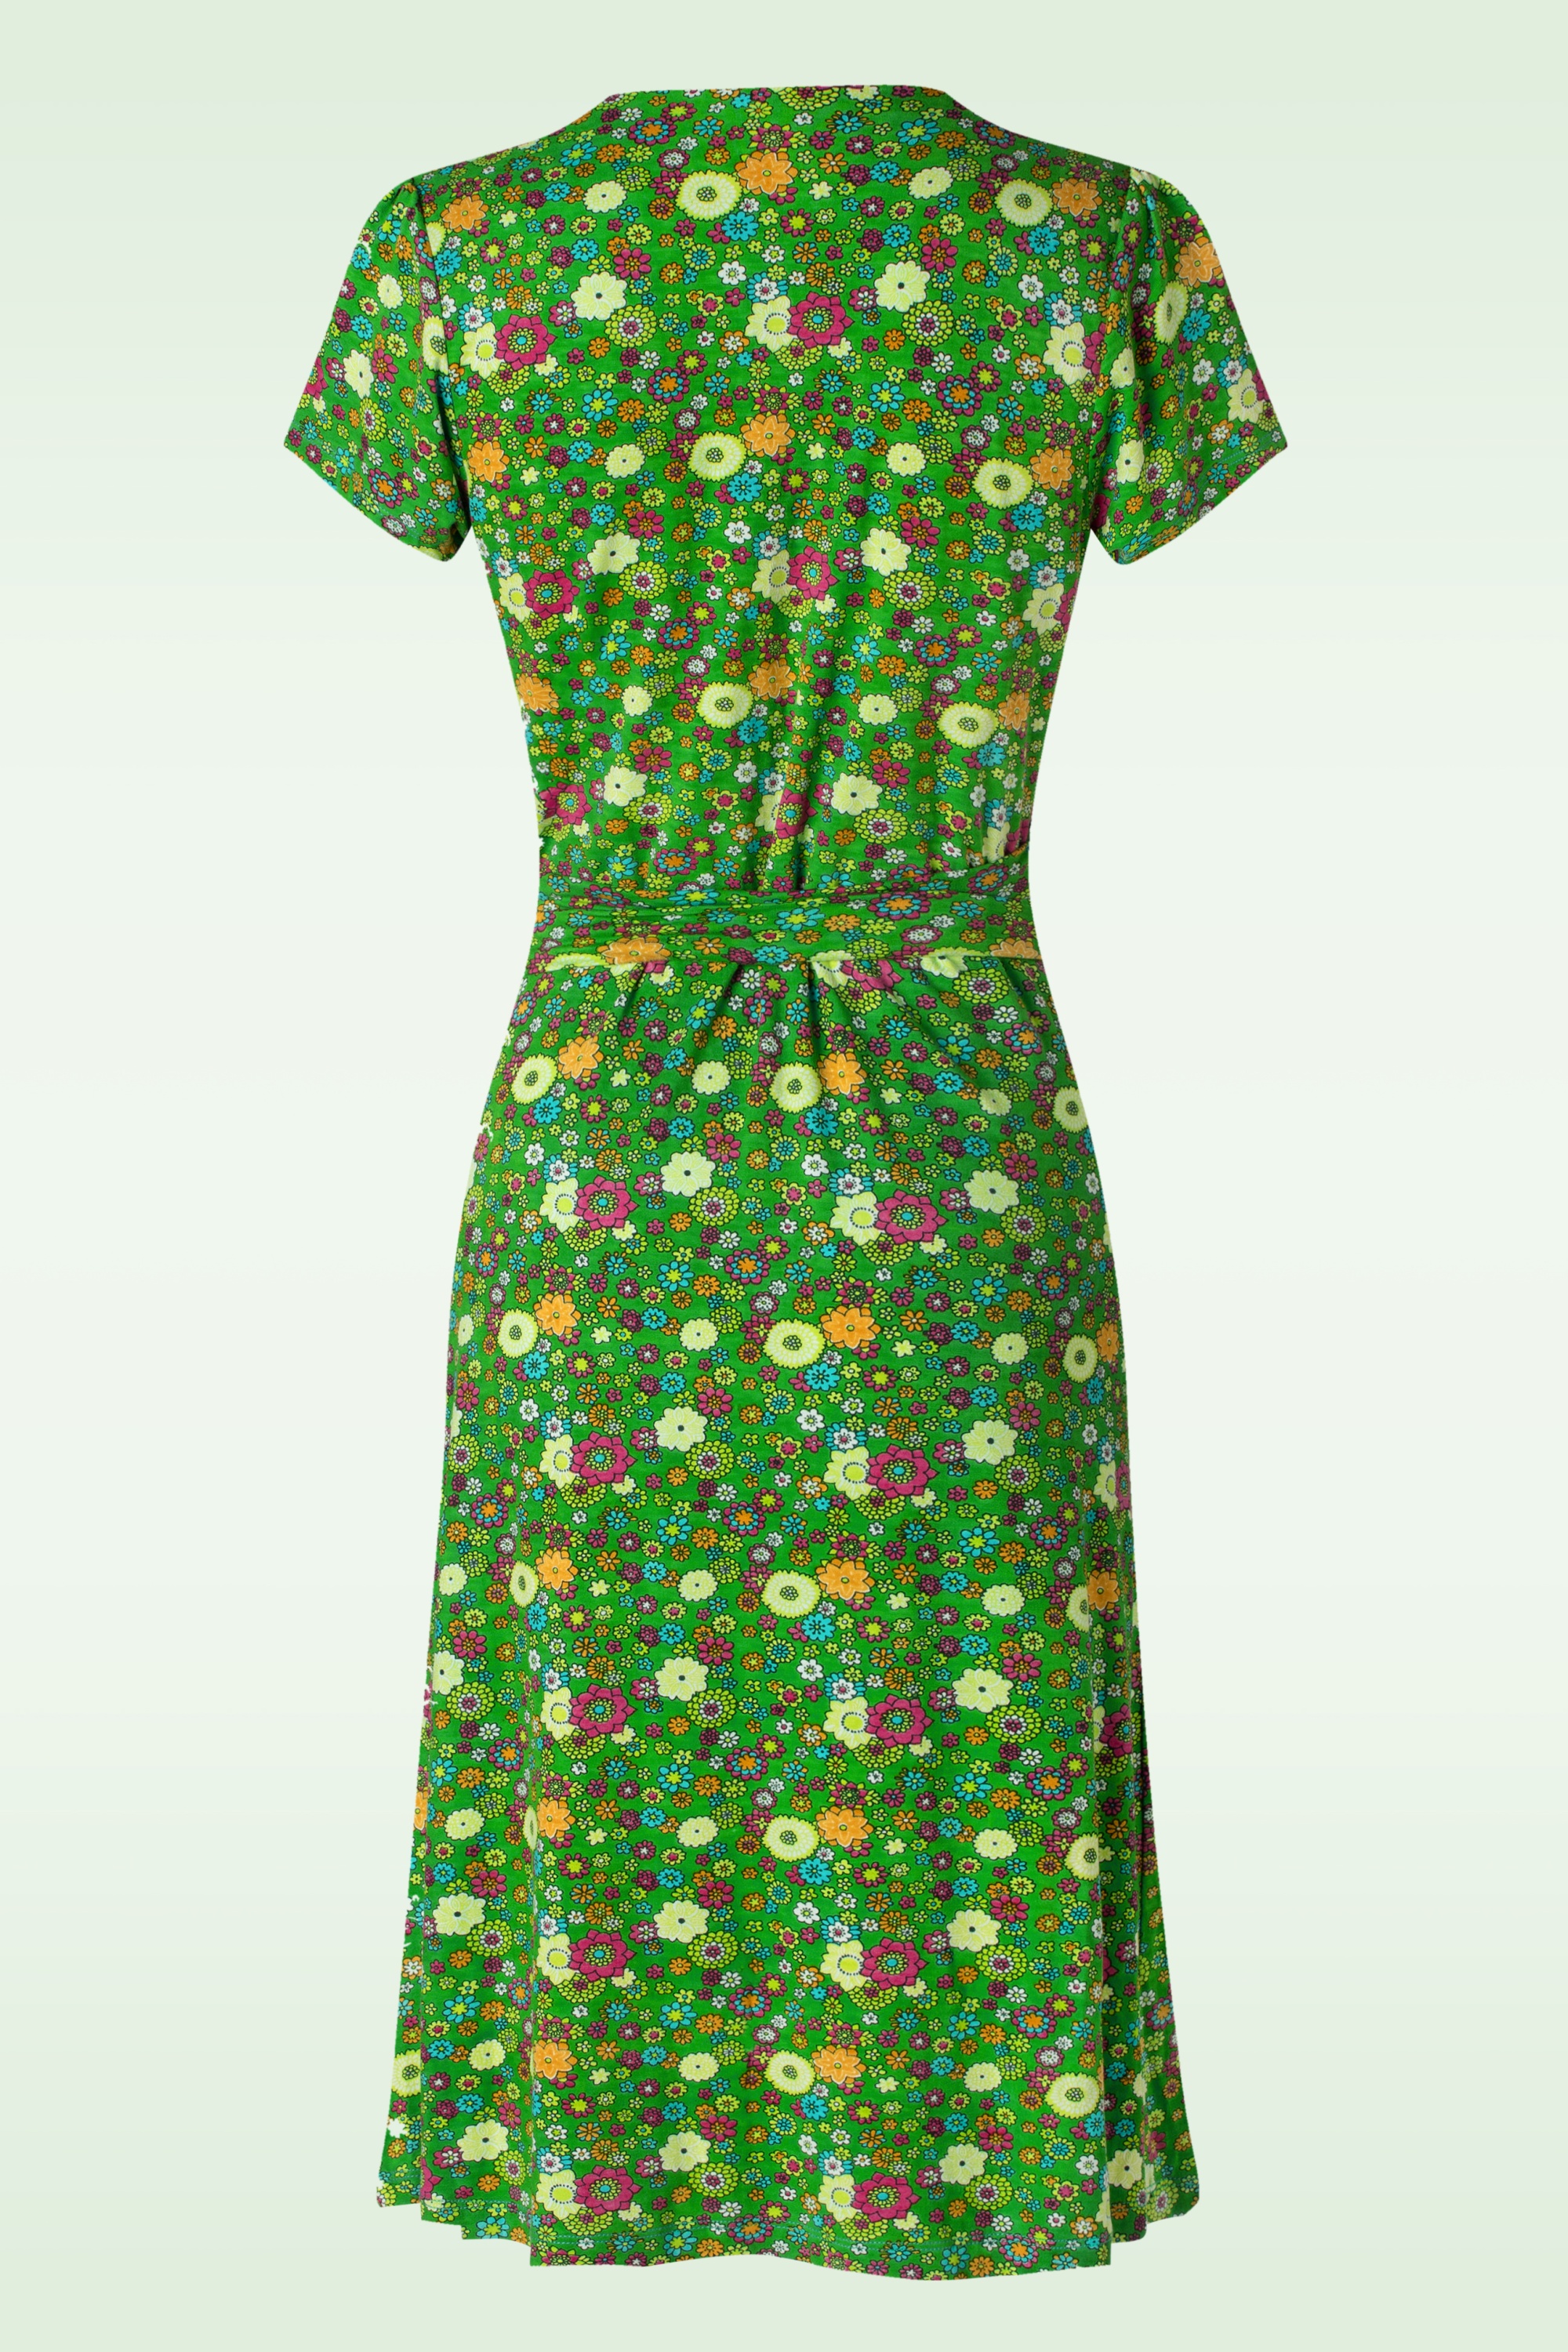 Pretty Vacant - Robin Retro bloemen jurk in groen 2